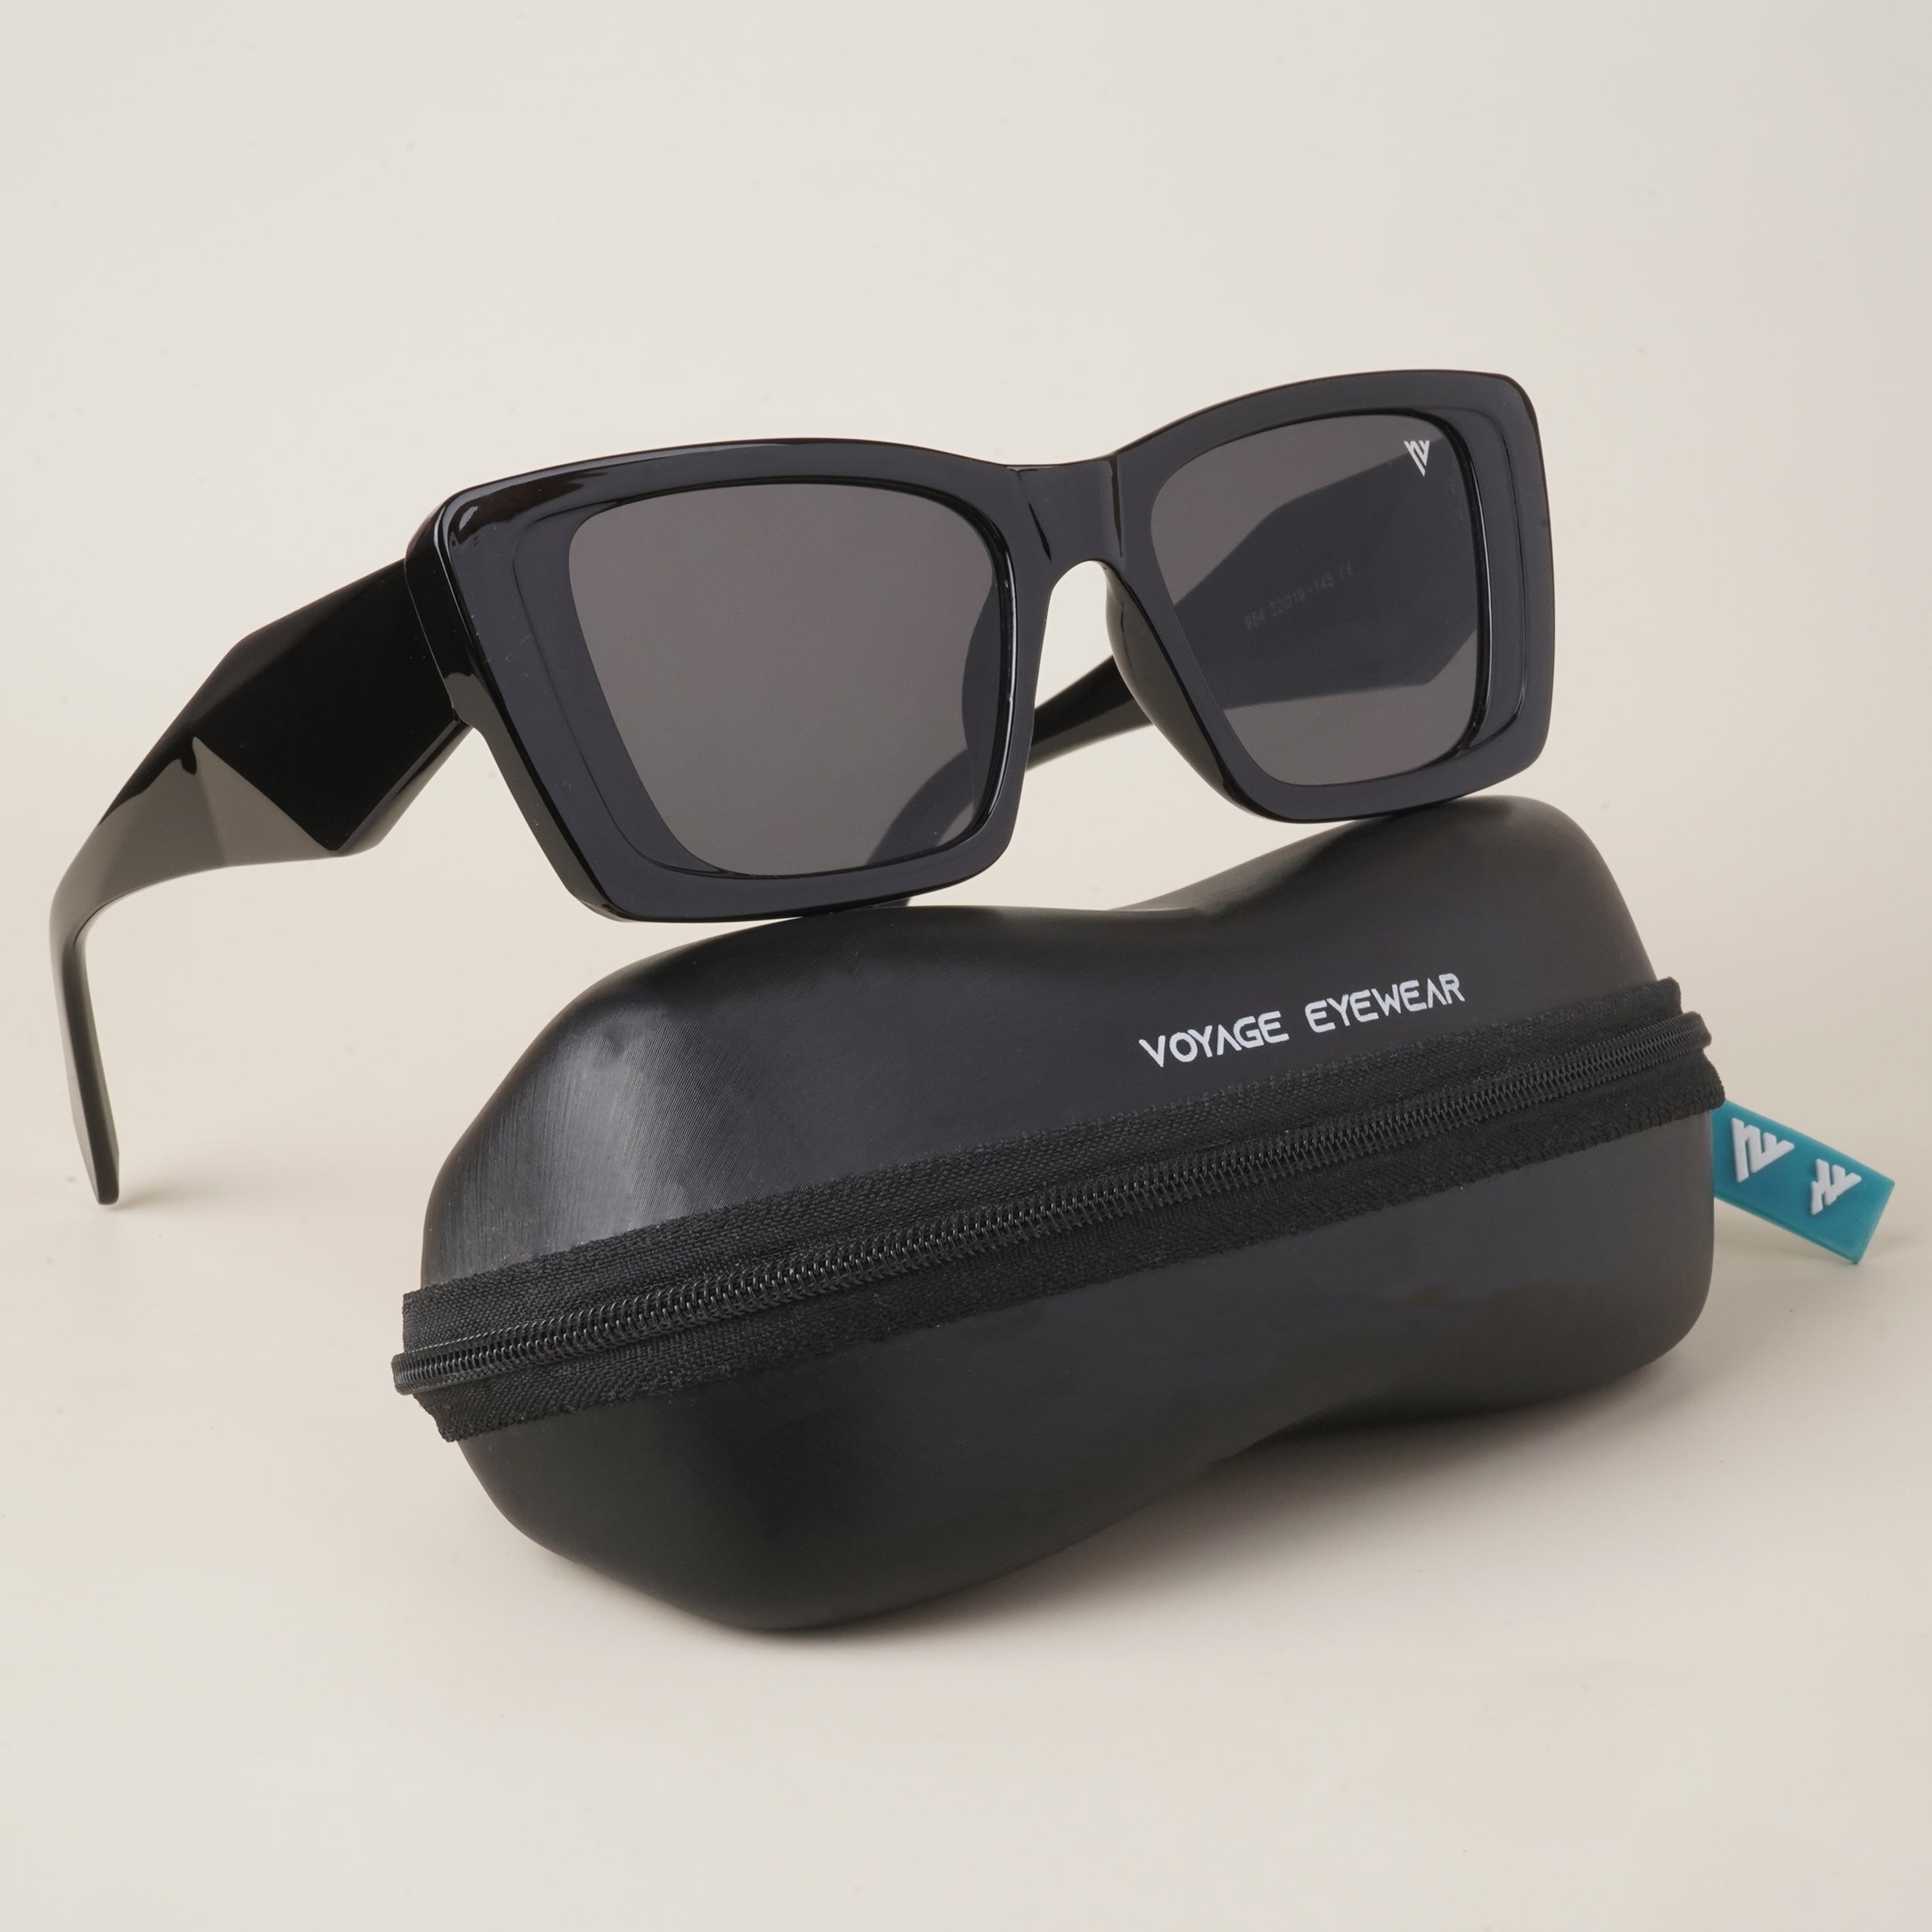 Voyage Black Cateye Sunglasses MG3684